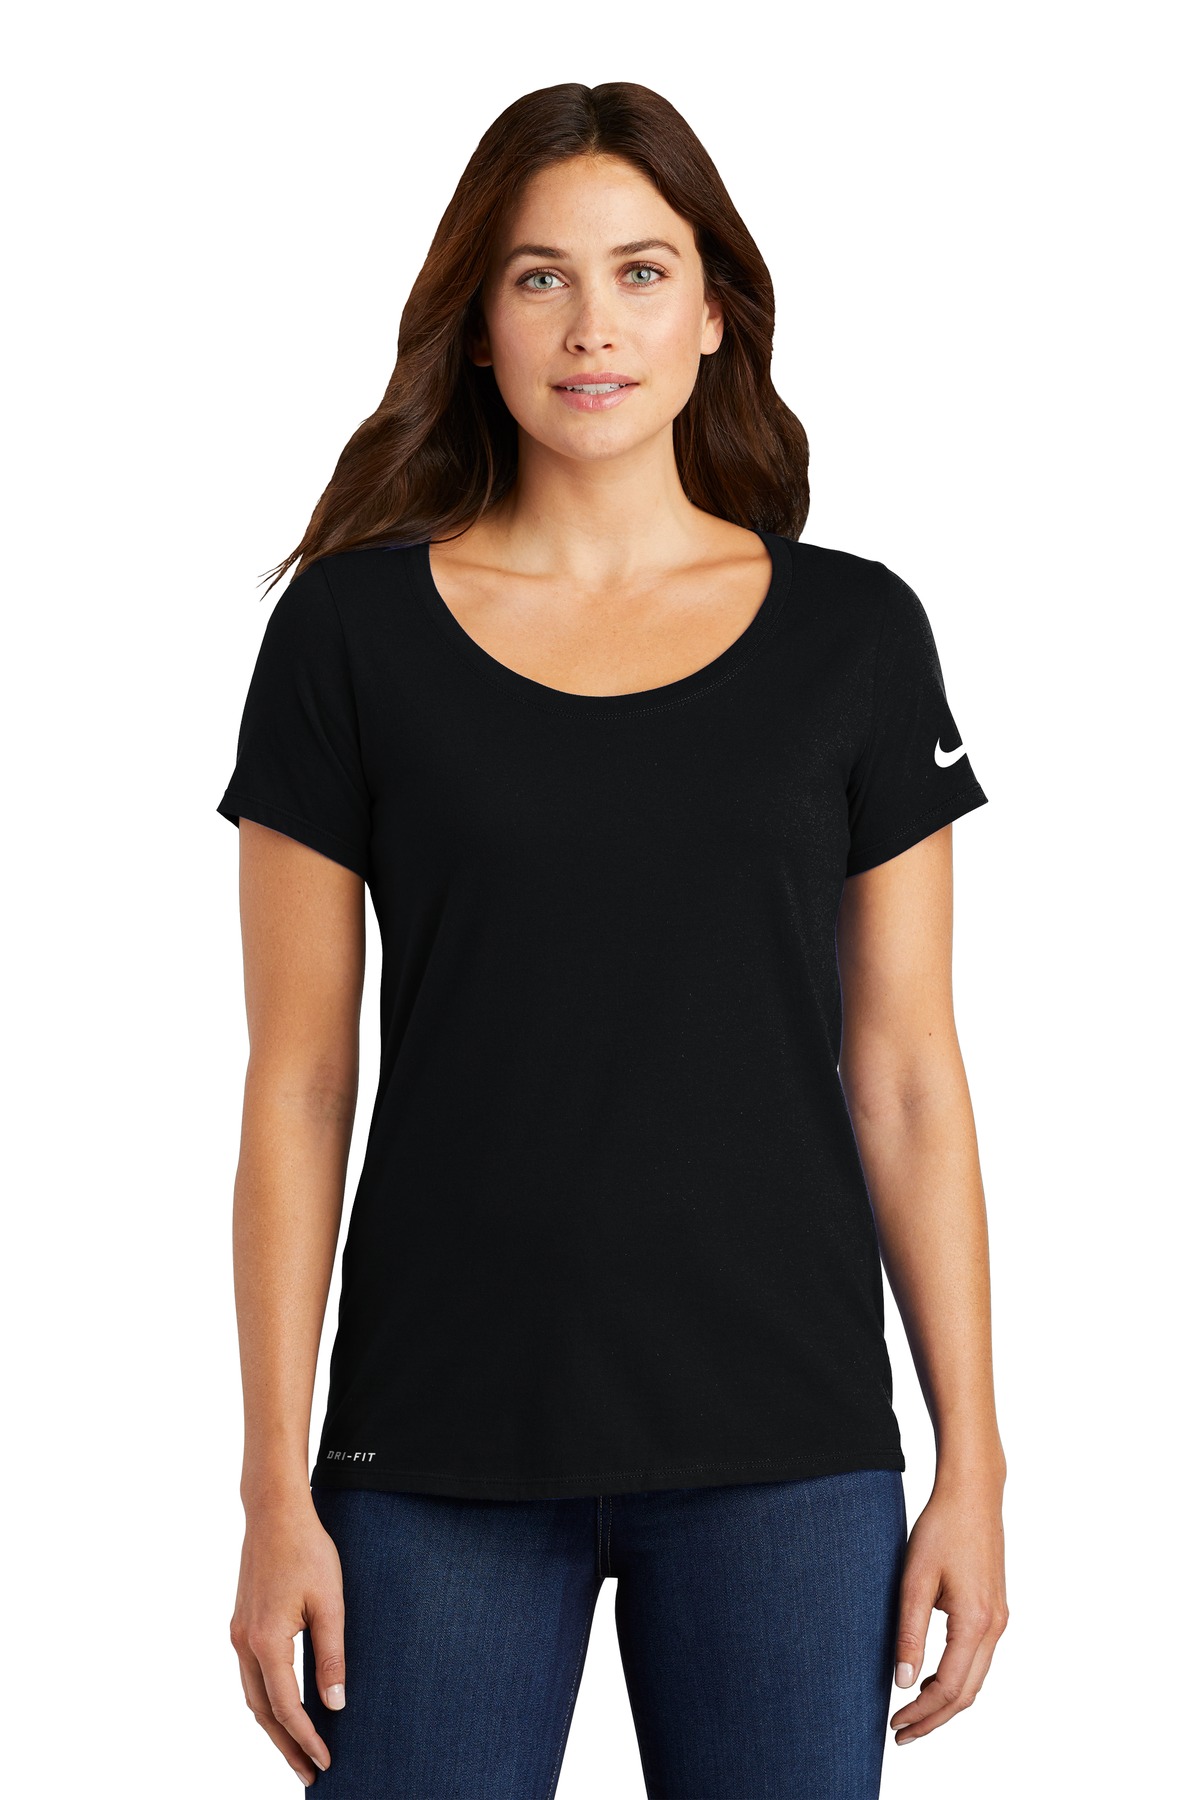 Nike Ladies Hospitality T-Shirts Ladies Dri-FIT Cotton/Poly Scoop Neck Tee.-Nike